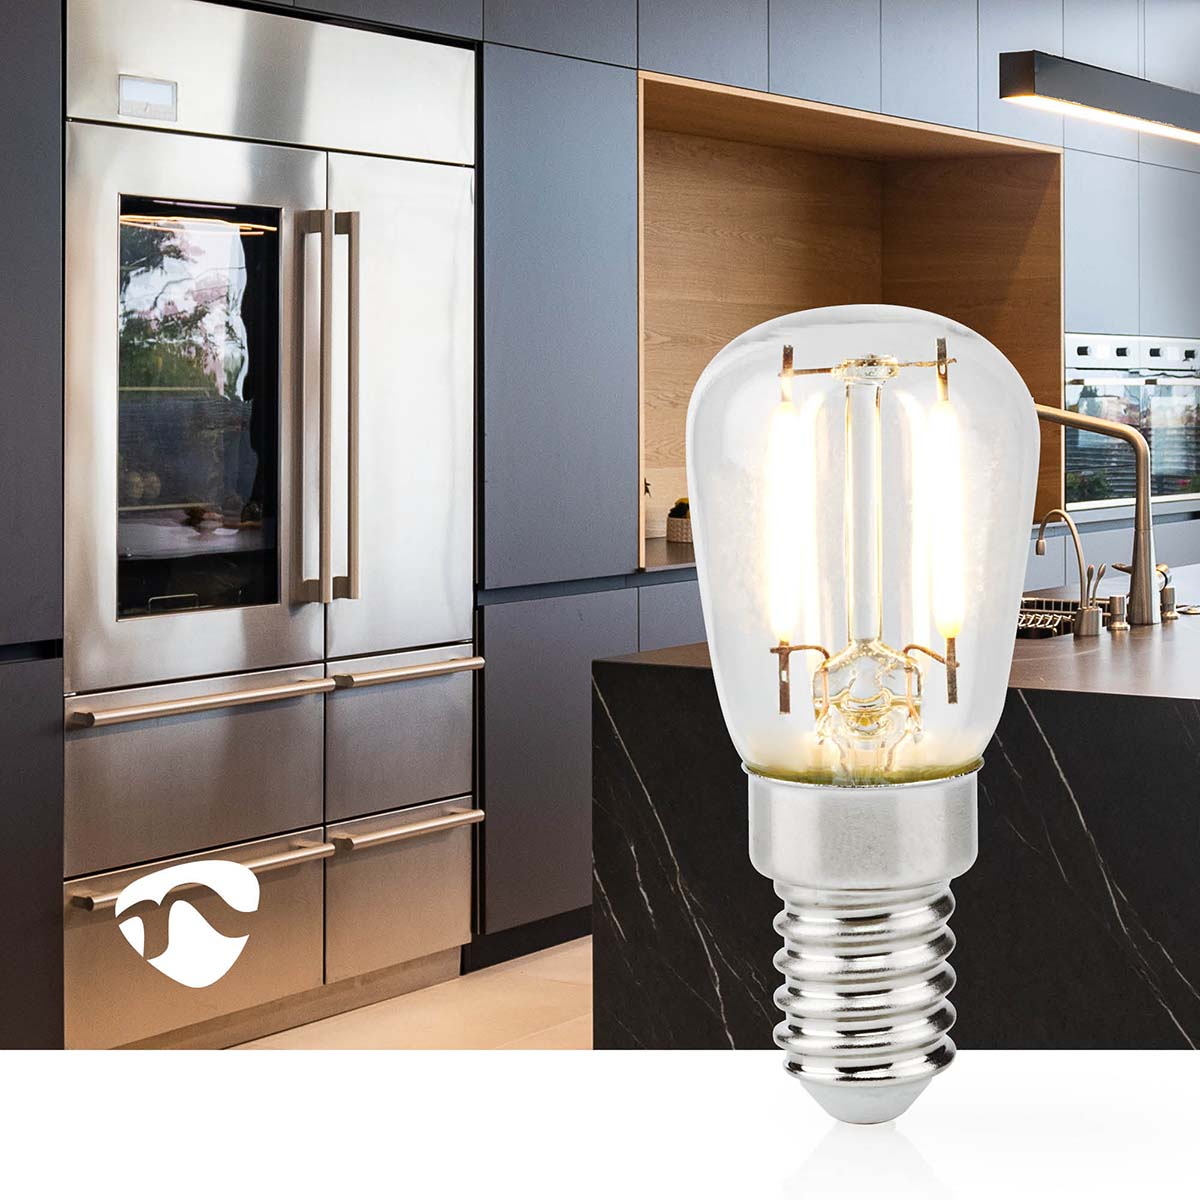 Nedis LBCRFE14T26 Kühlschranklampe LED | E14 | 2 W | T26